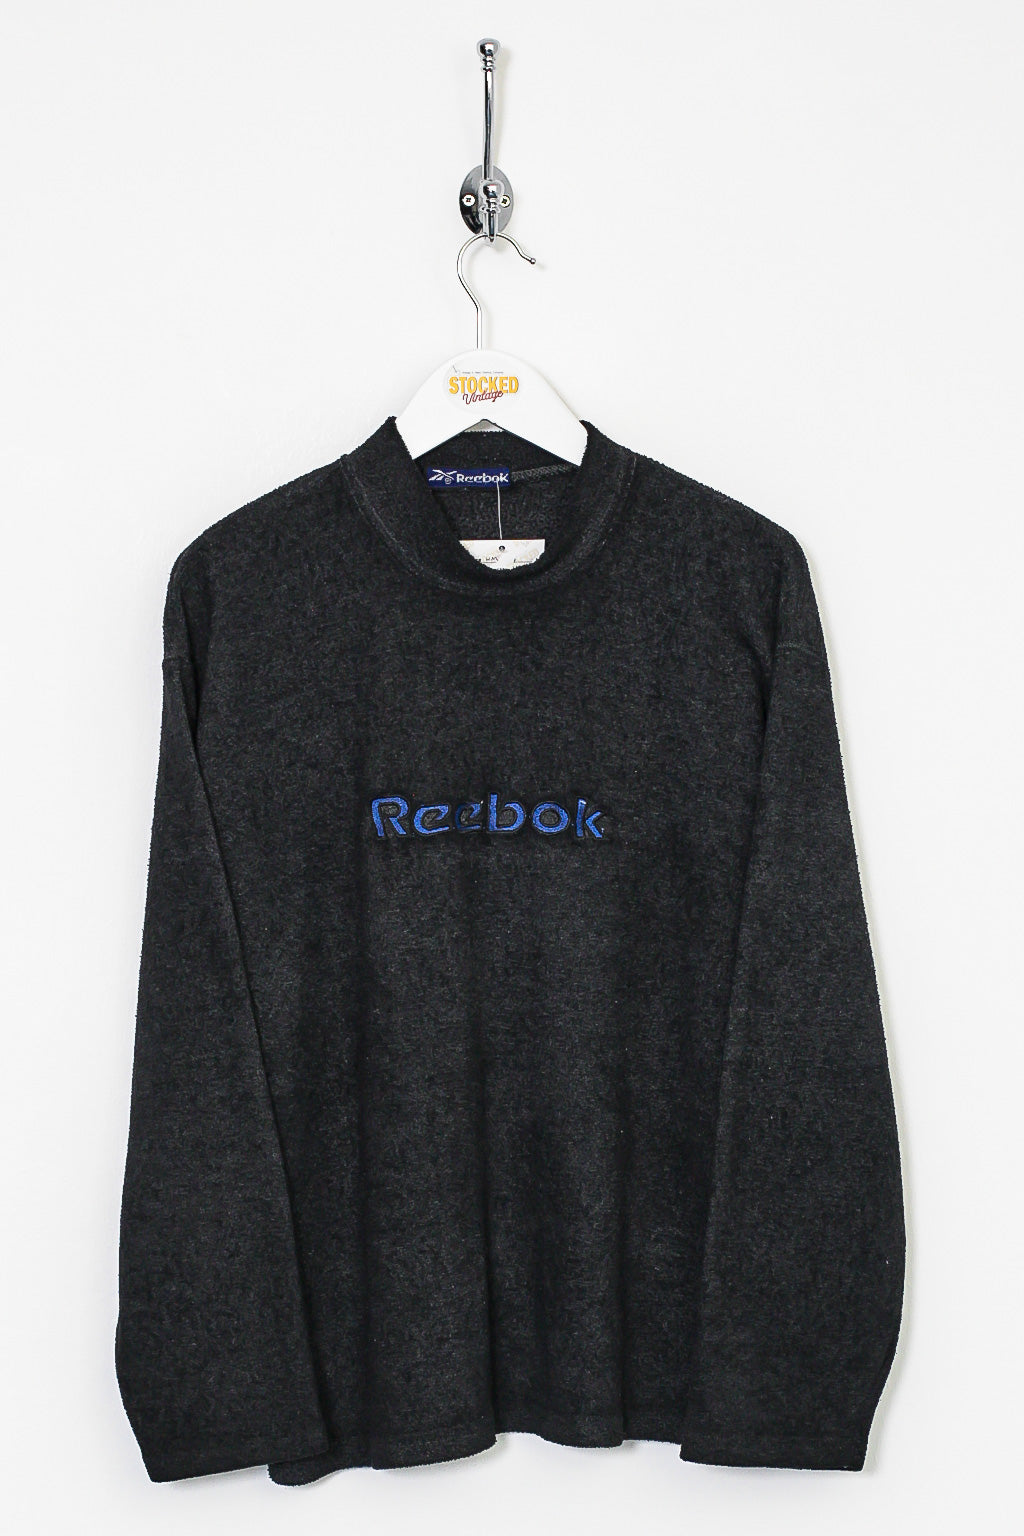 Womens Reebok Sweatshirt (M)